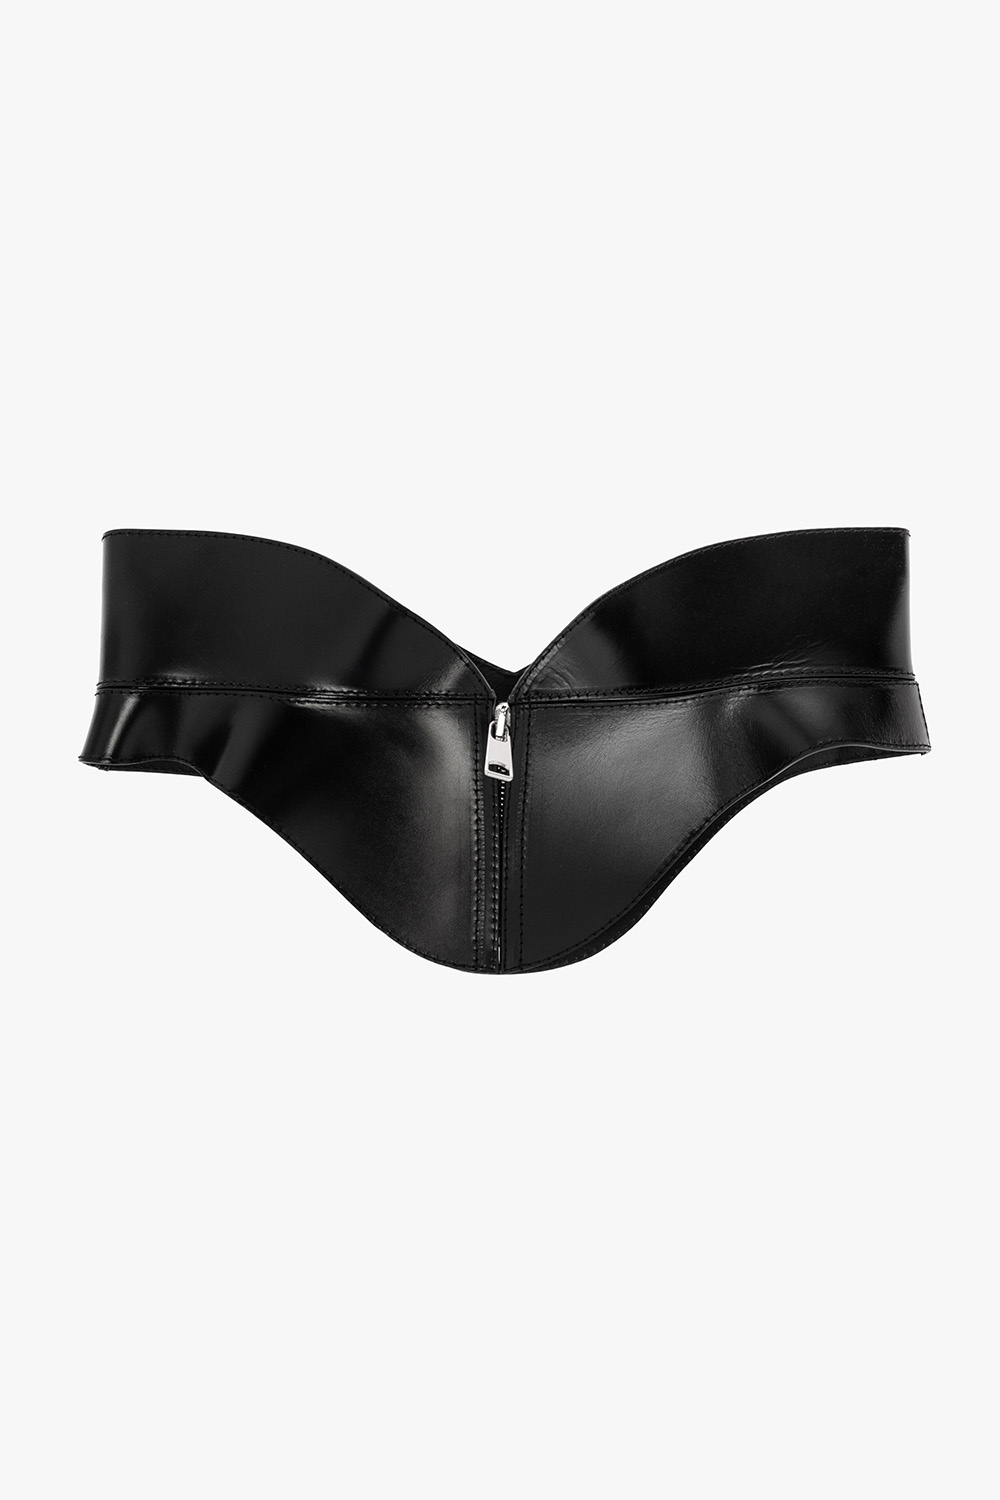 ALEXANDER MCQUEEN KNITTED SWEATER - GenesinlifeShops Canada - Black Leather  corset belt Alexander McQueen